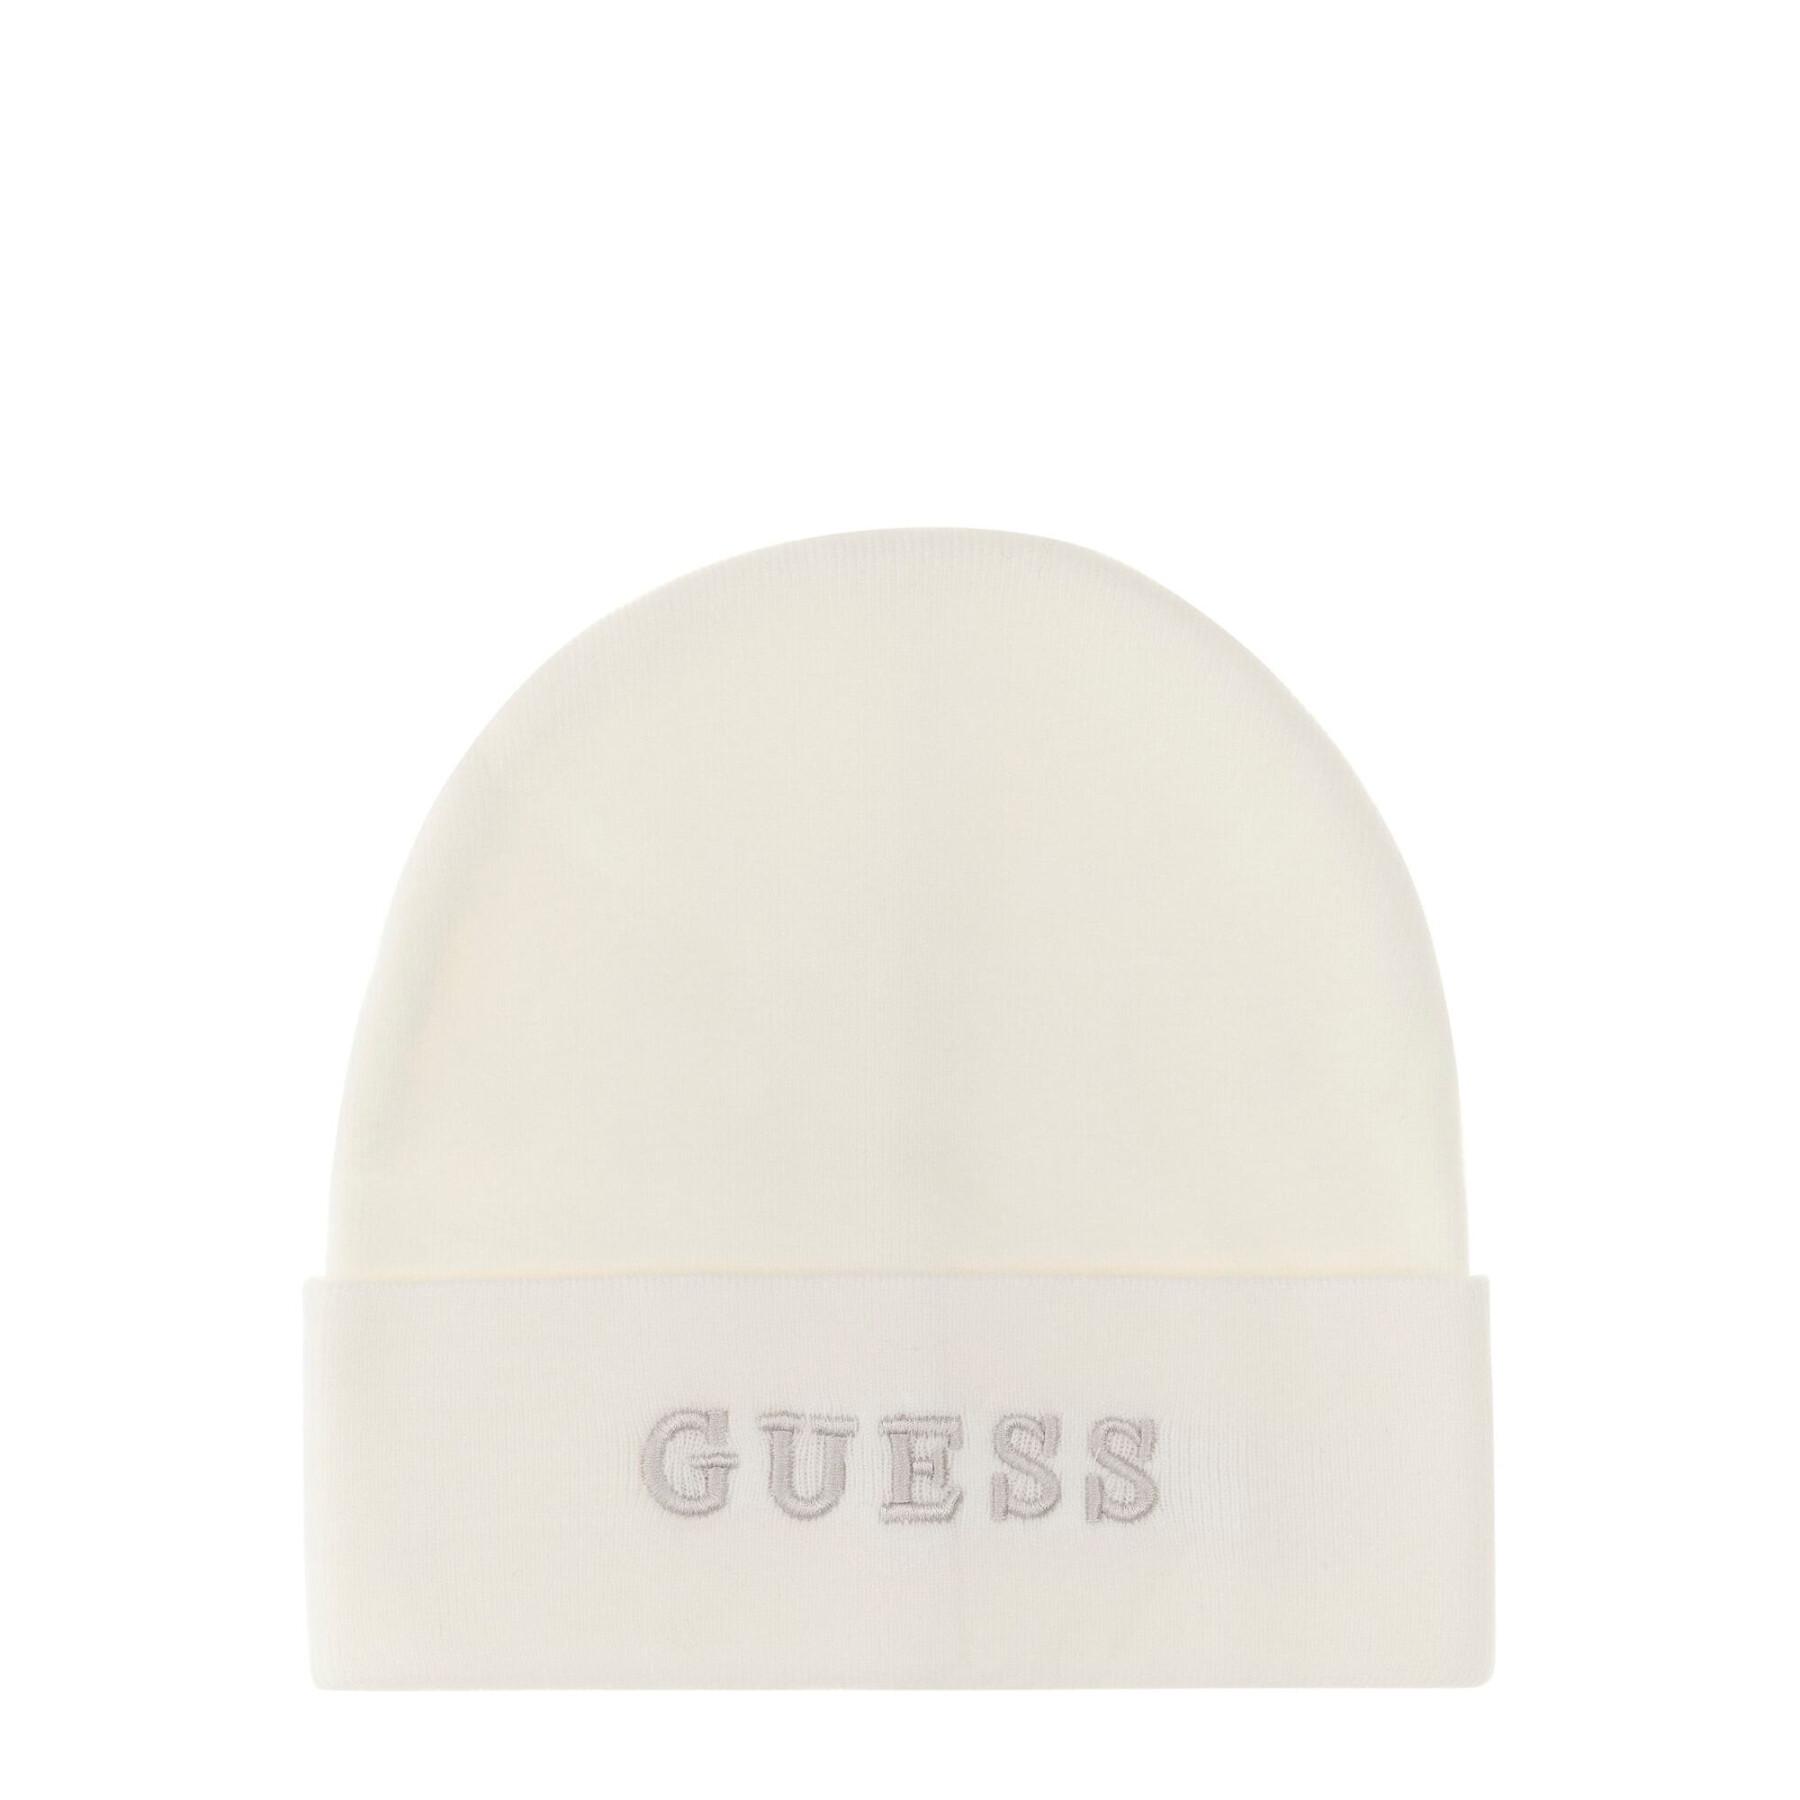 Women's hat Guess